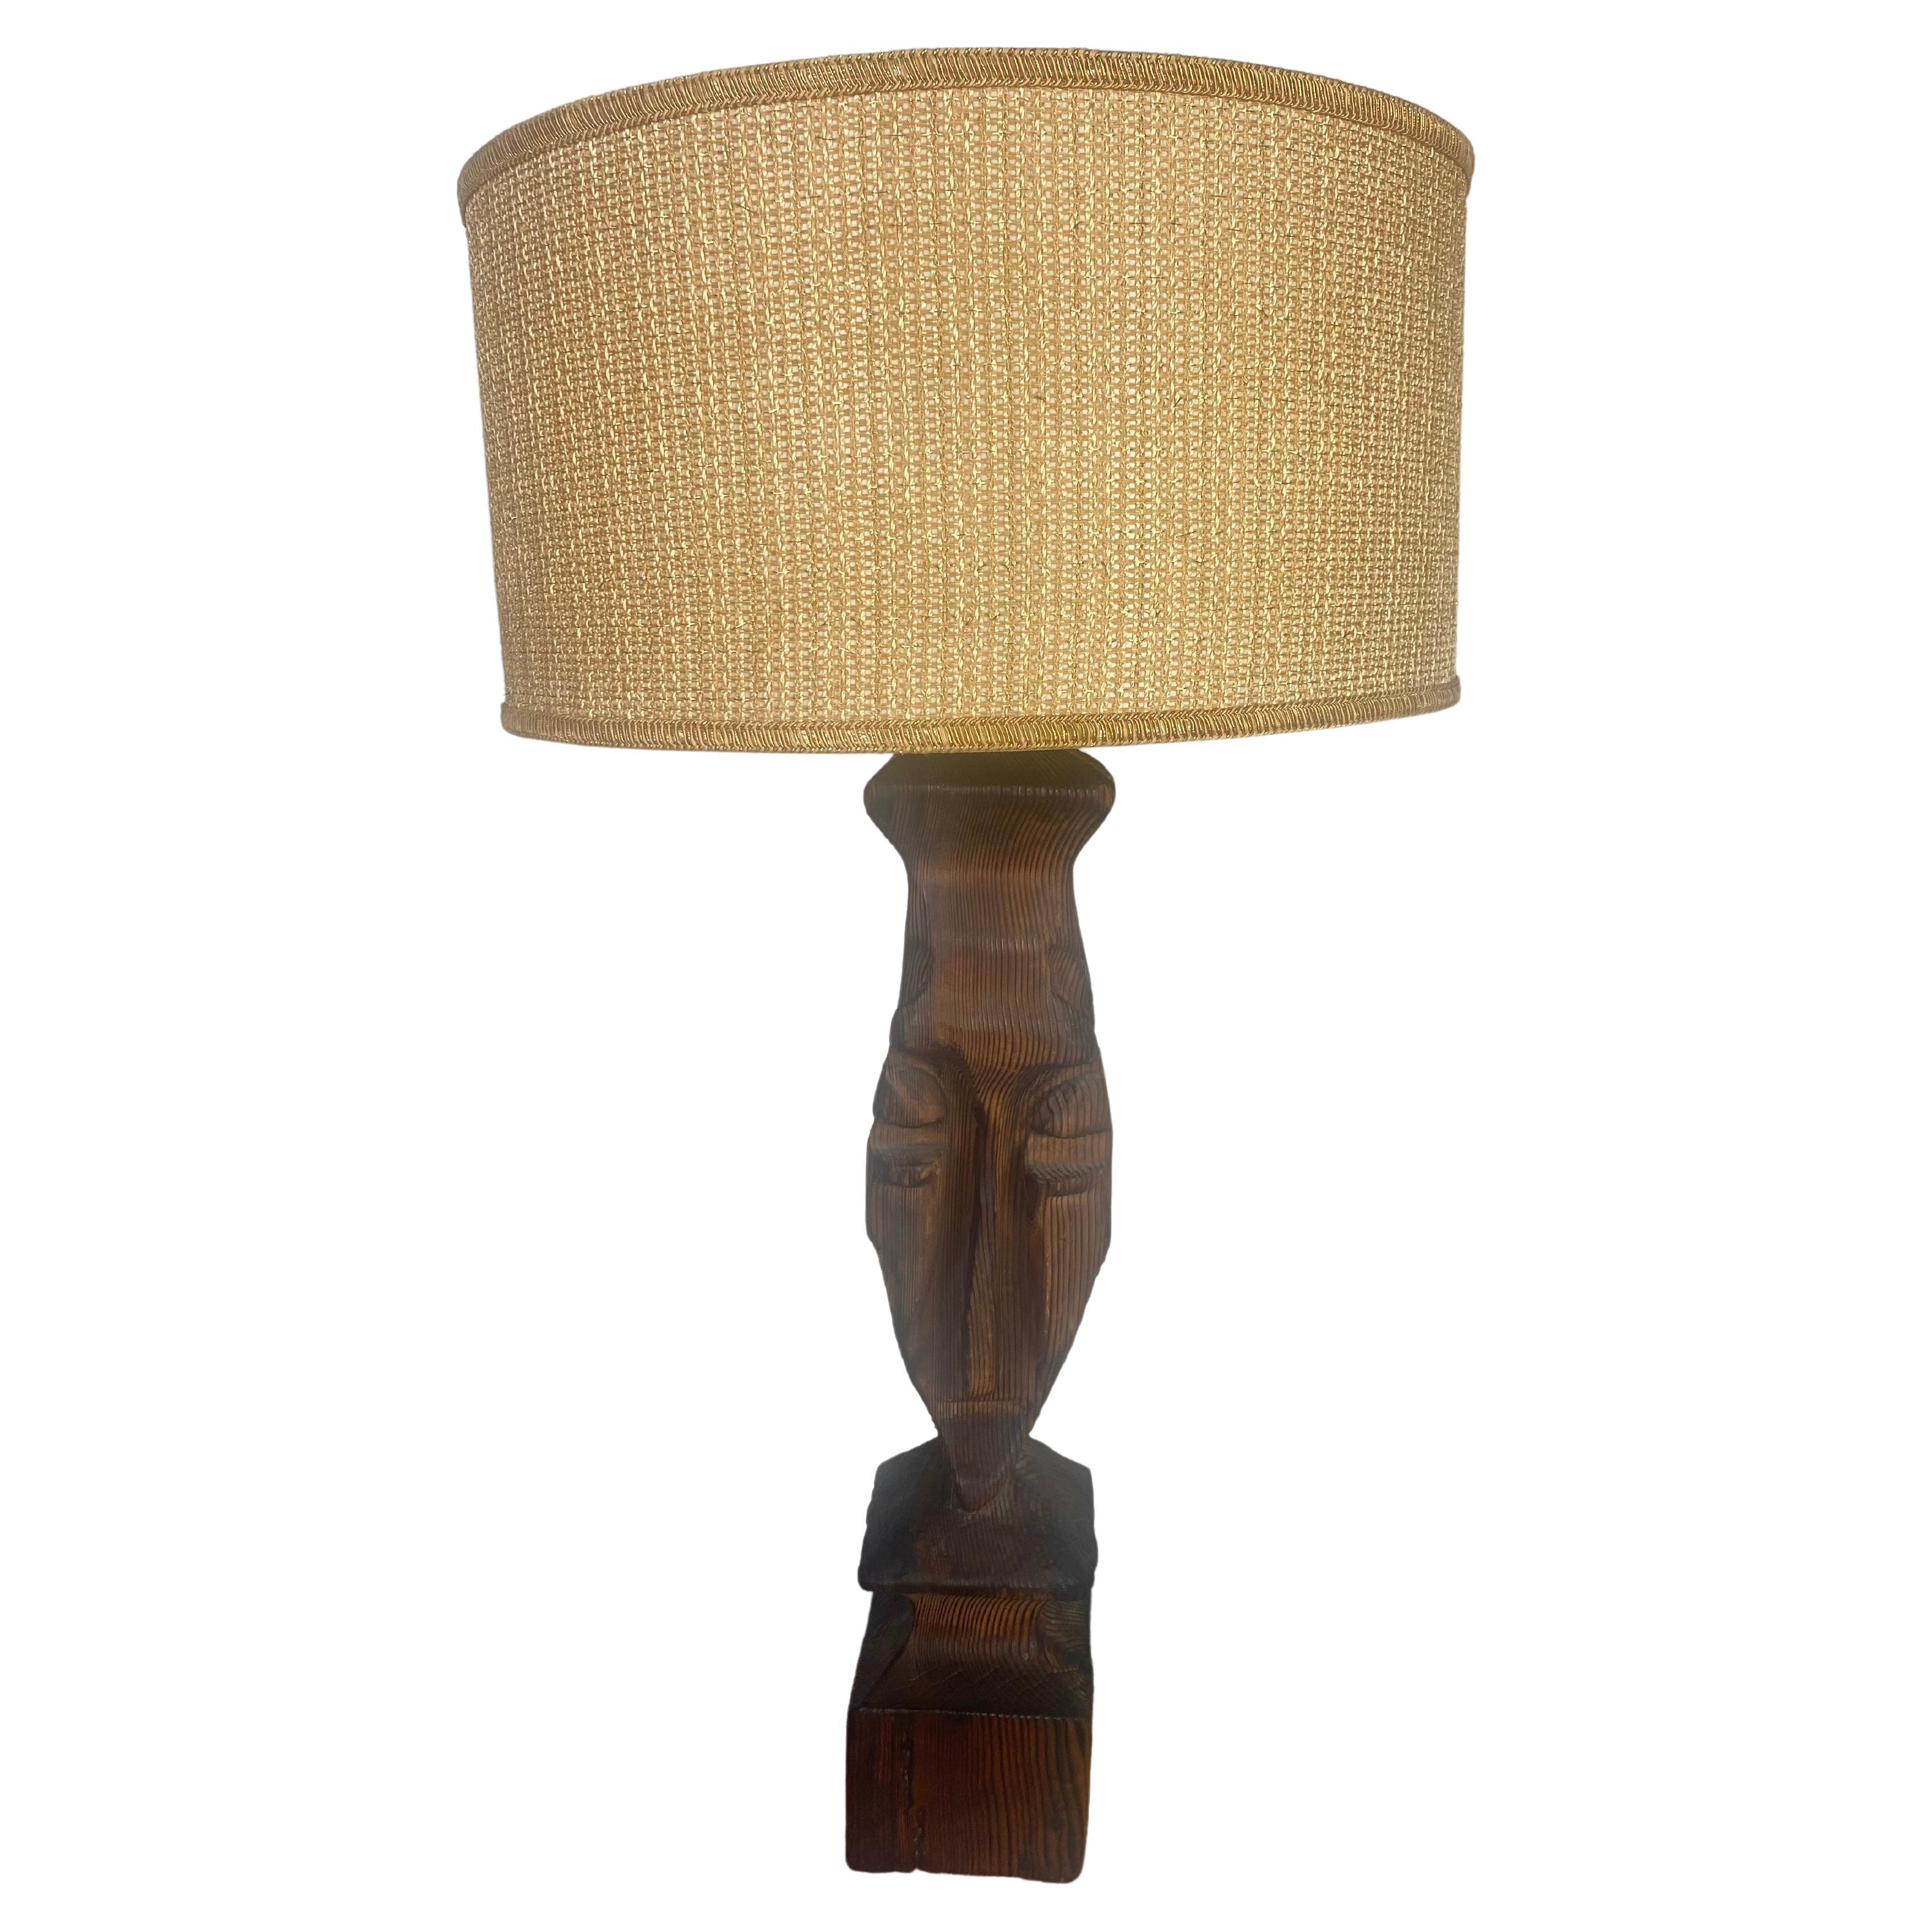 Rare Witco Tiki Figural Table Lamp, , Abstract Modernist Design